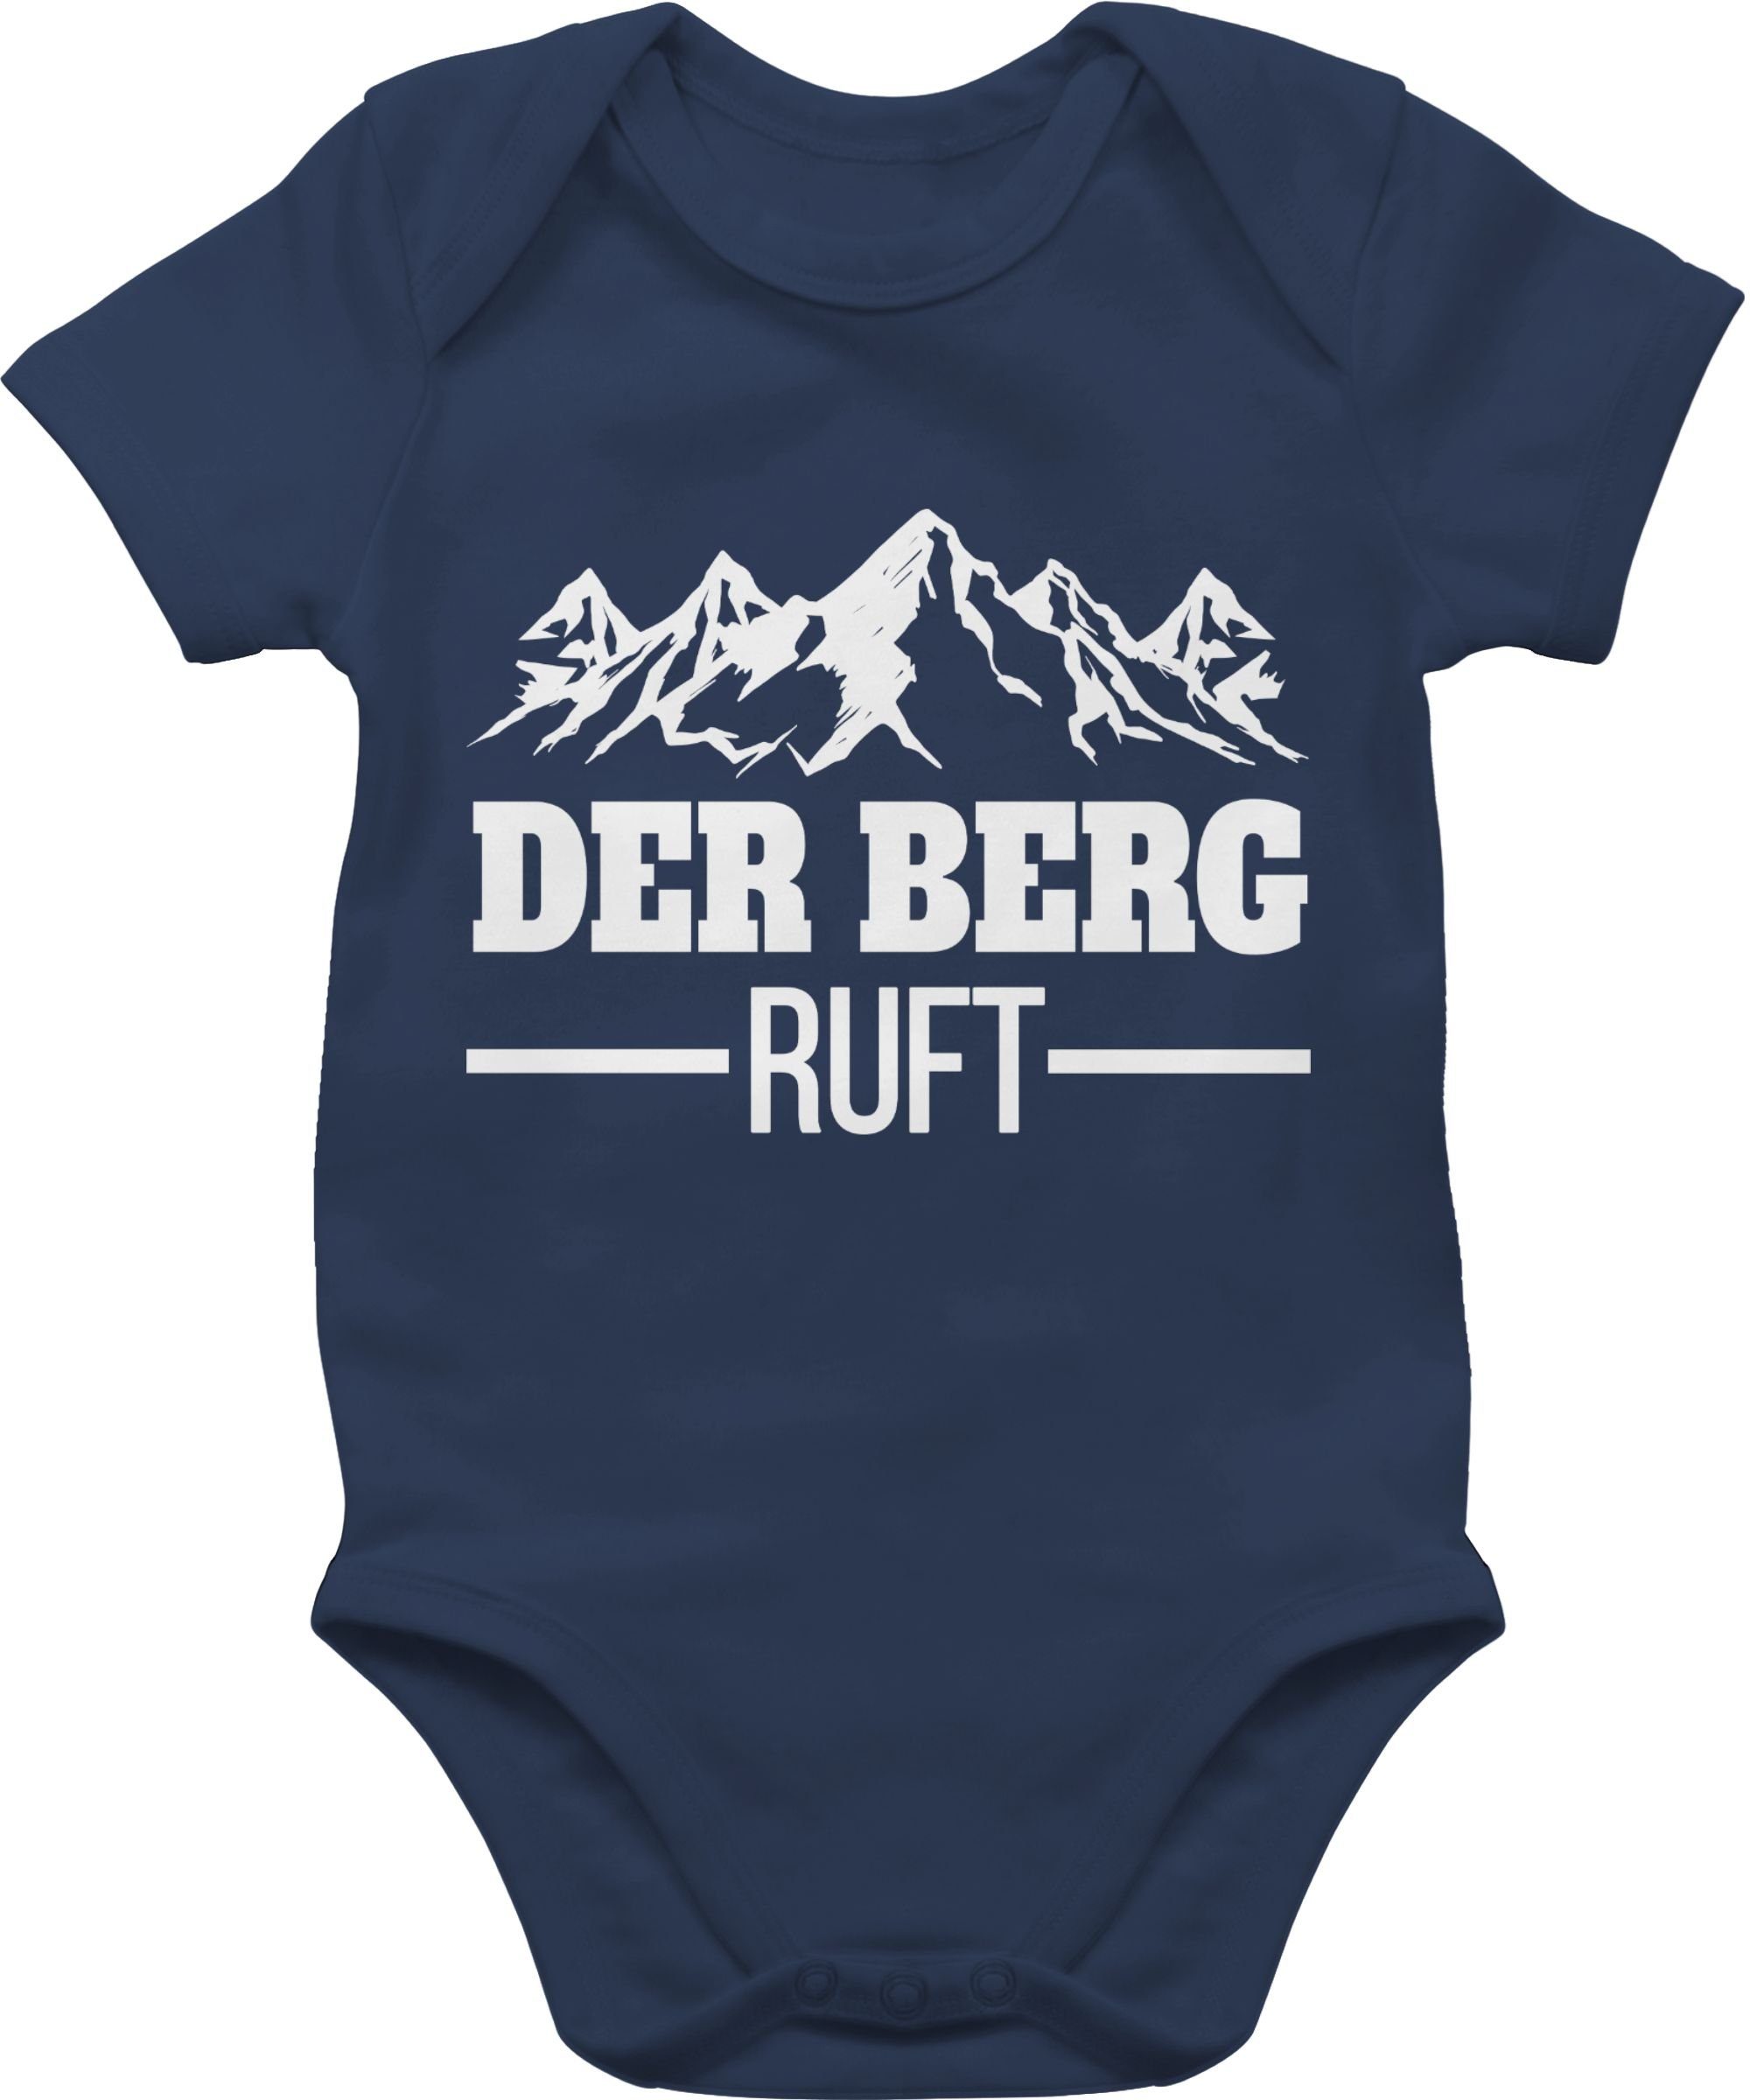 Shirtracer Shirtbody Der Berg ruft Sport & Bewegung Baby 1 Navy Blau